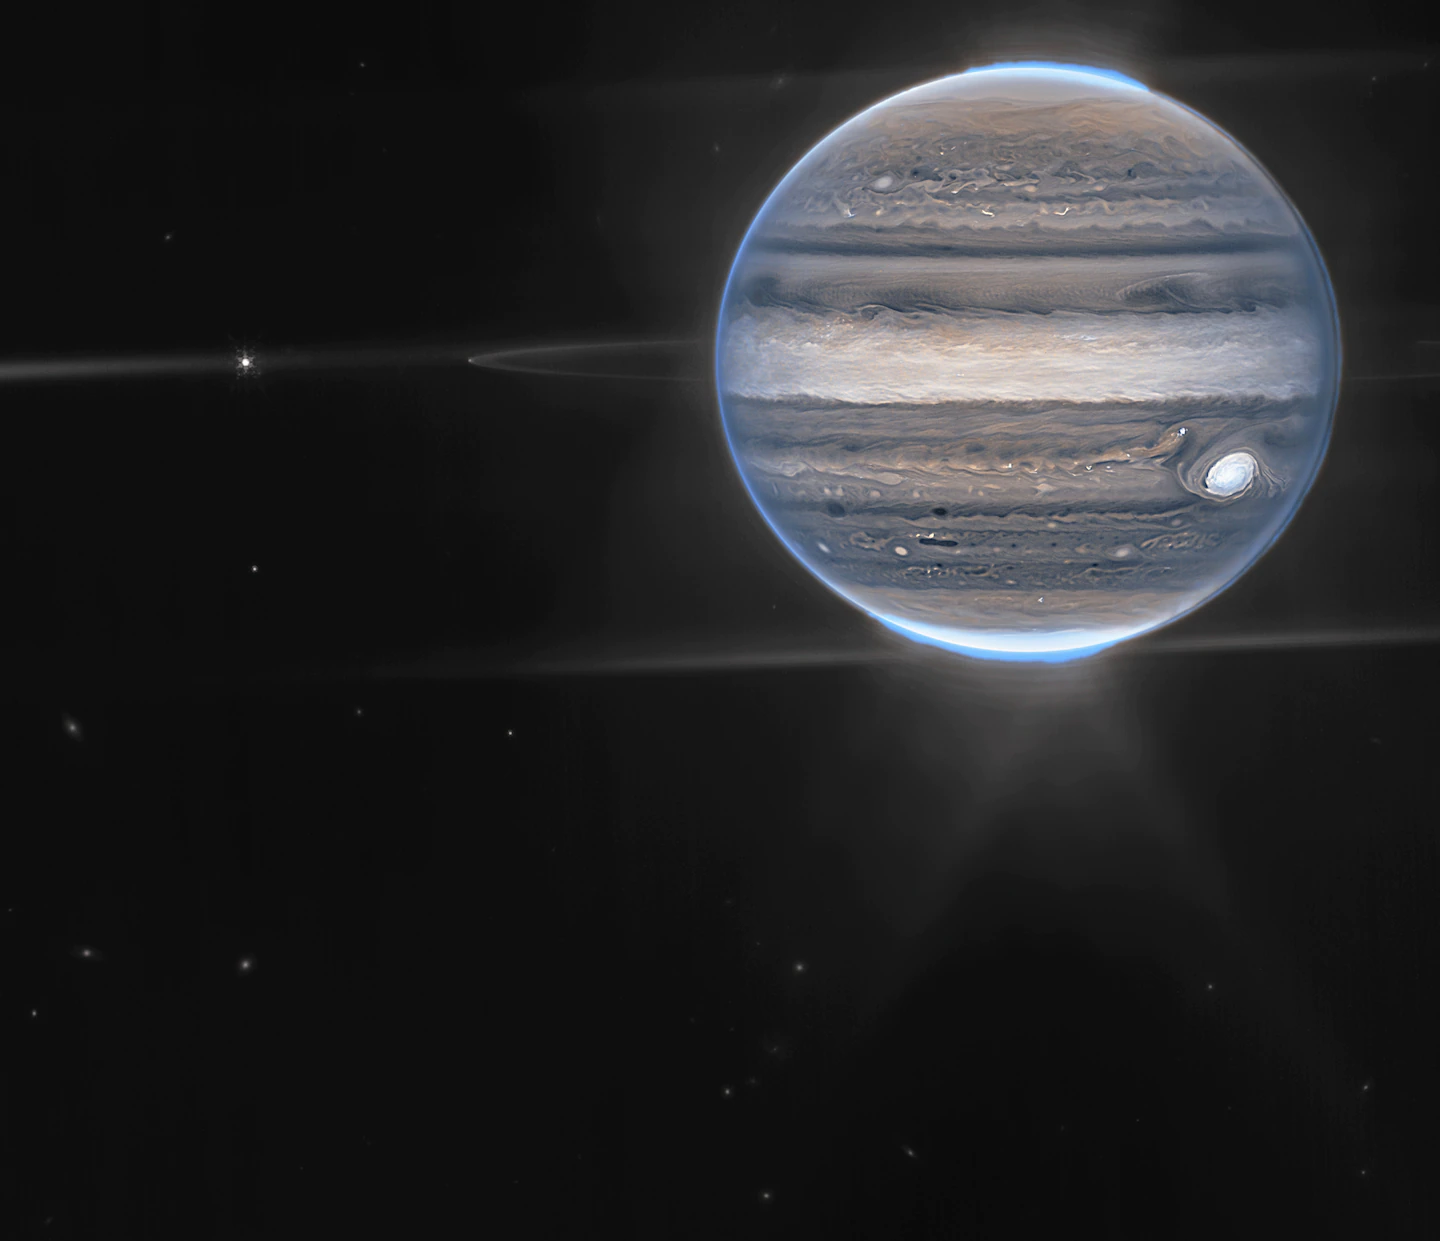  Stunning Jupiter images shown by NASA’s James Webb telescope